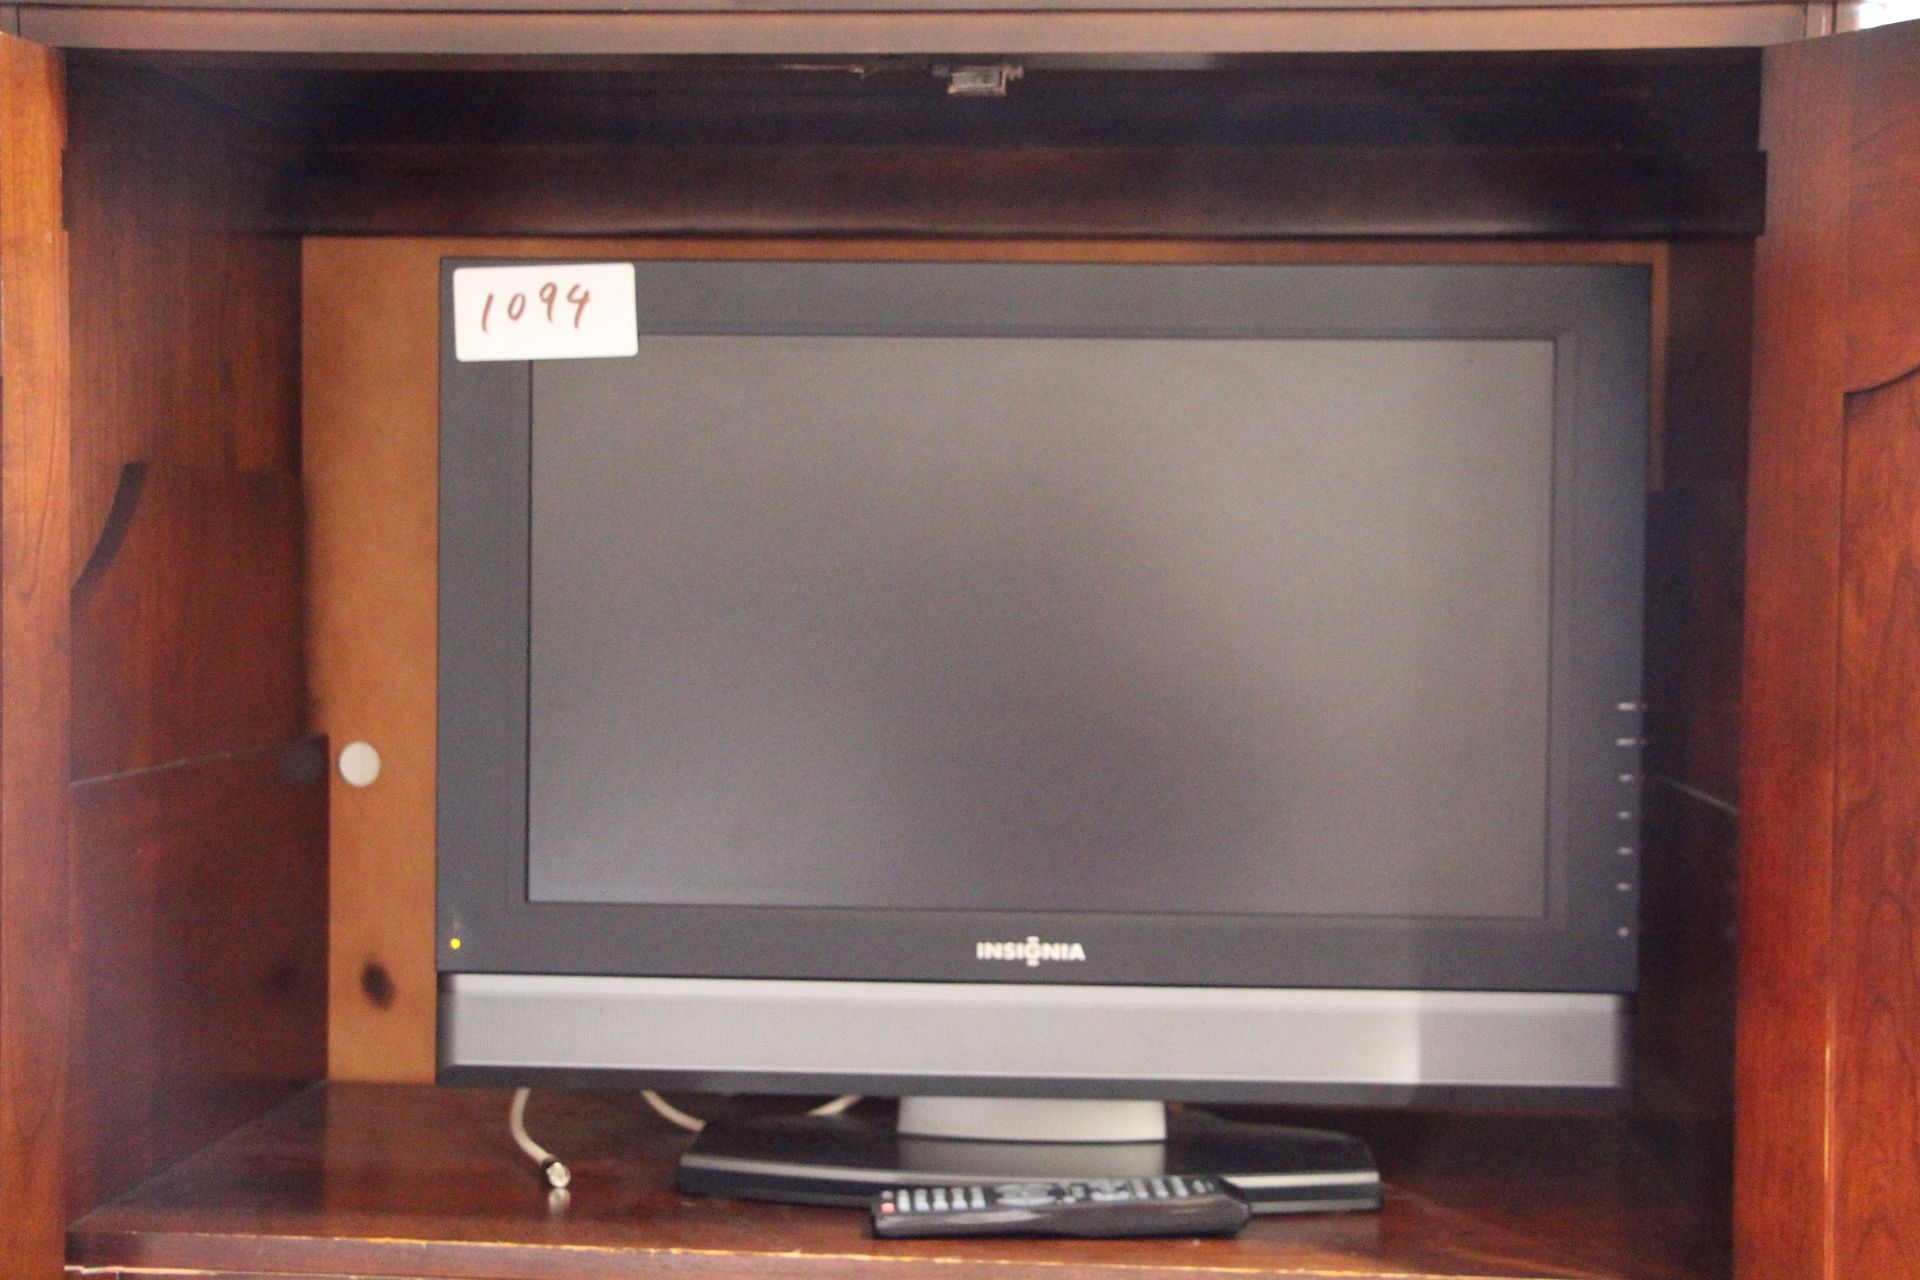 Insignia 26" LCD TV